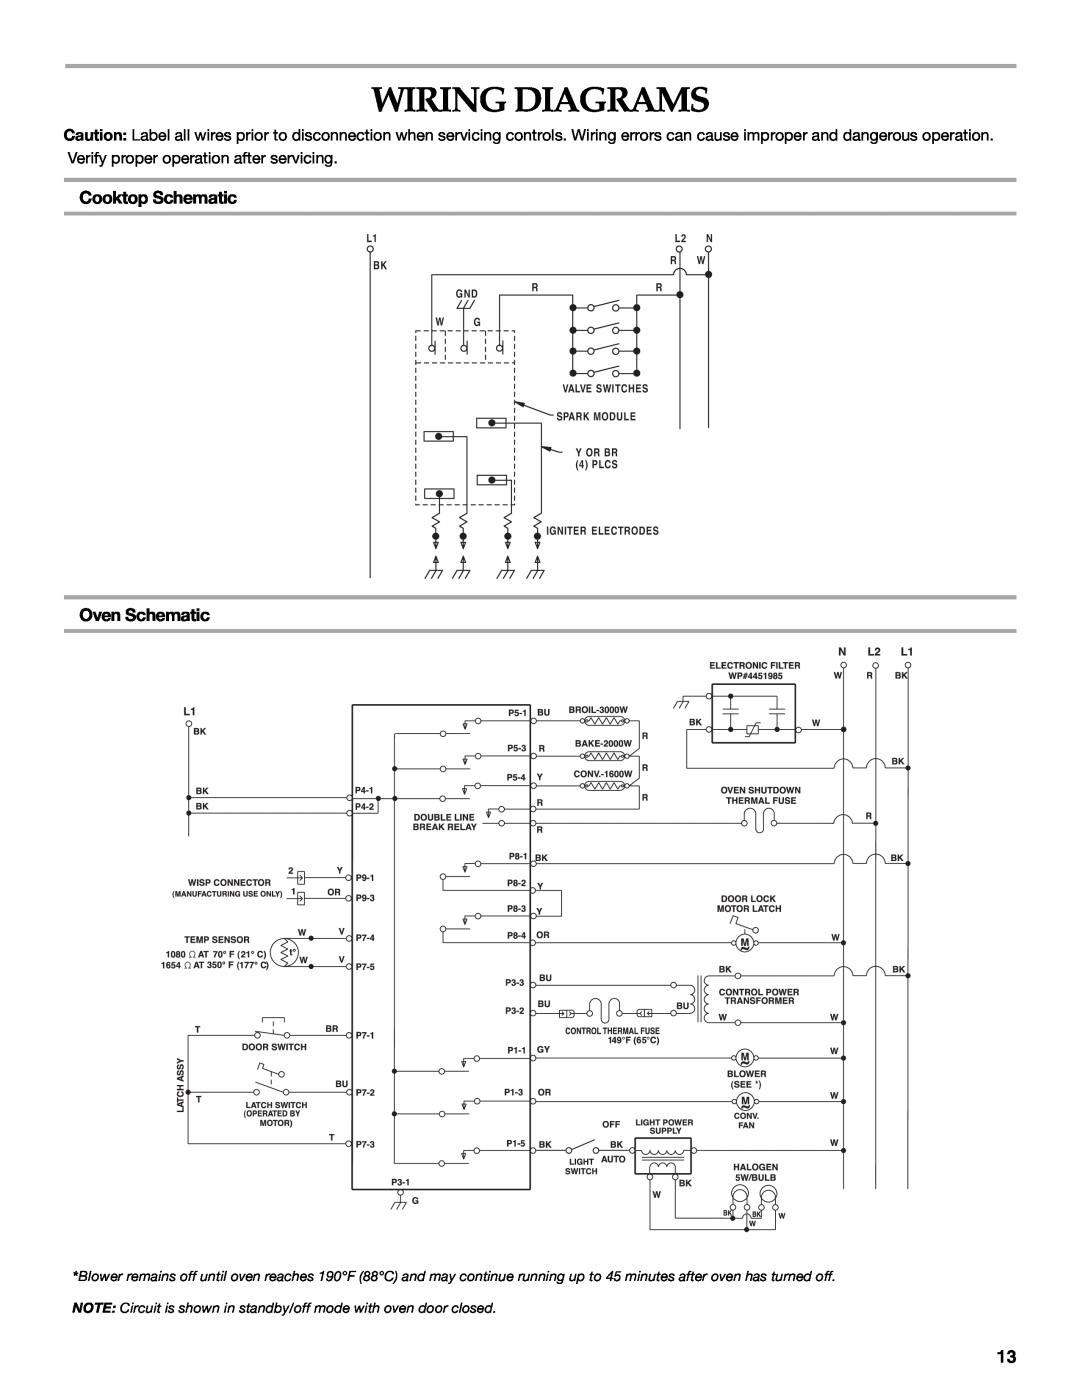 KitchenAid 9759536B installation instructions Wiring Diagrams, Cooktop Schematic, Oven Schematic 